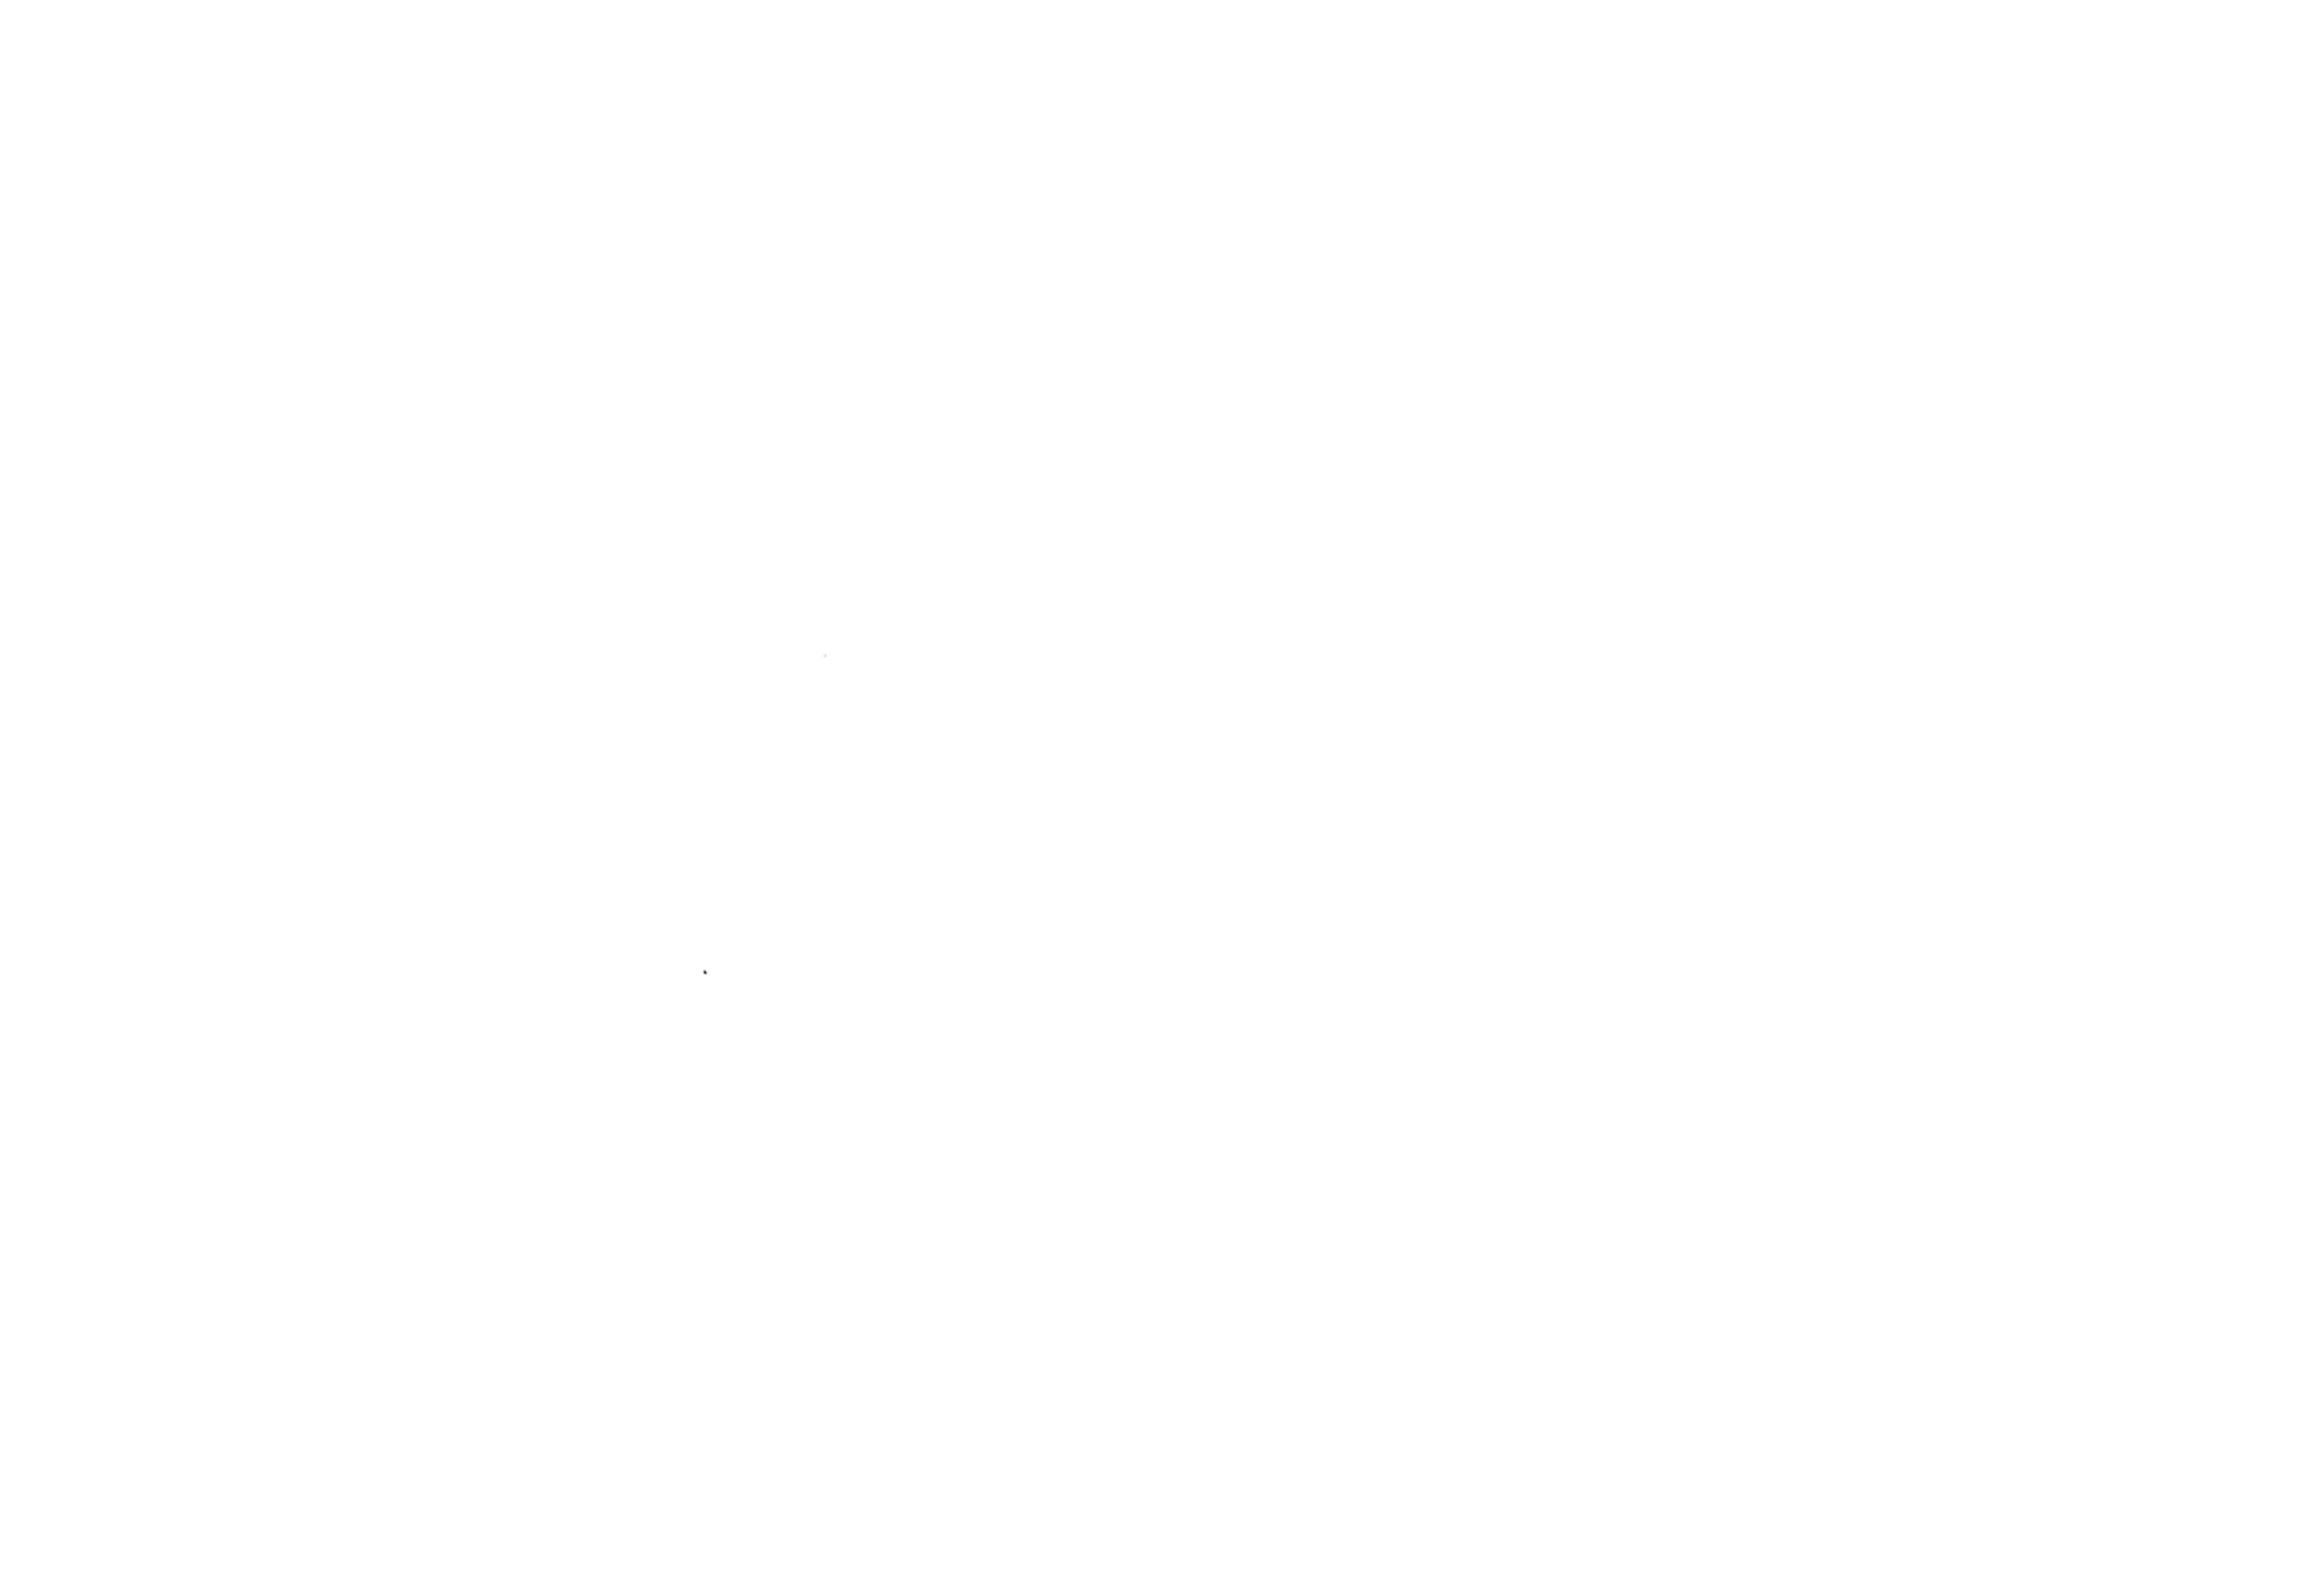 Tokyo Lift Off Film Festival 2019   Online official selection (white)